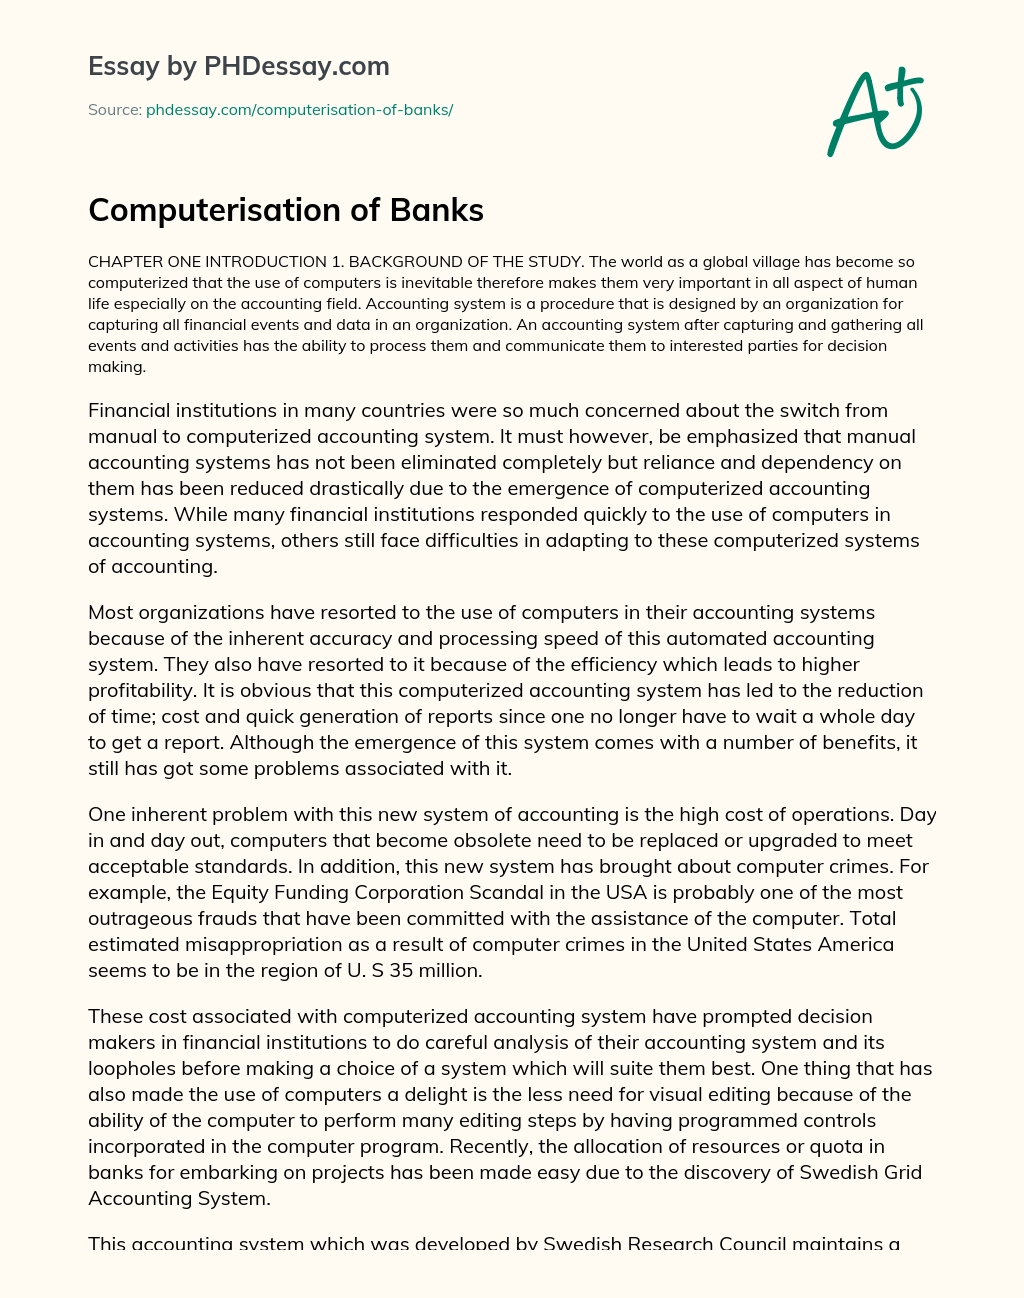 Computerisation of Banks essay